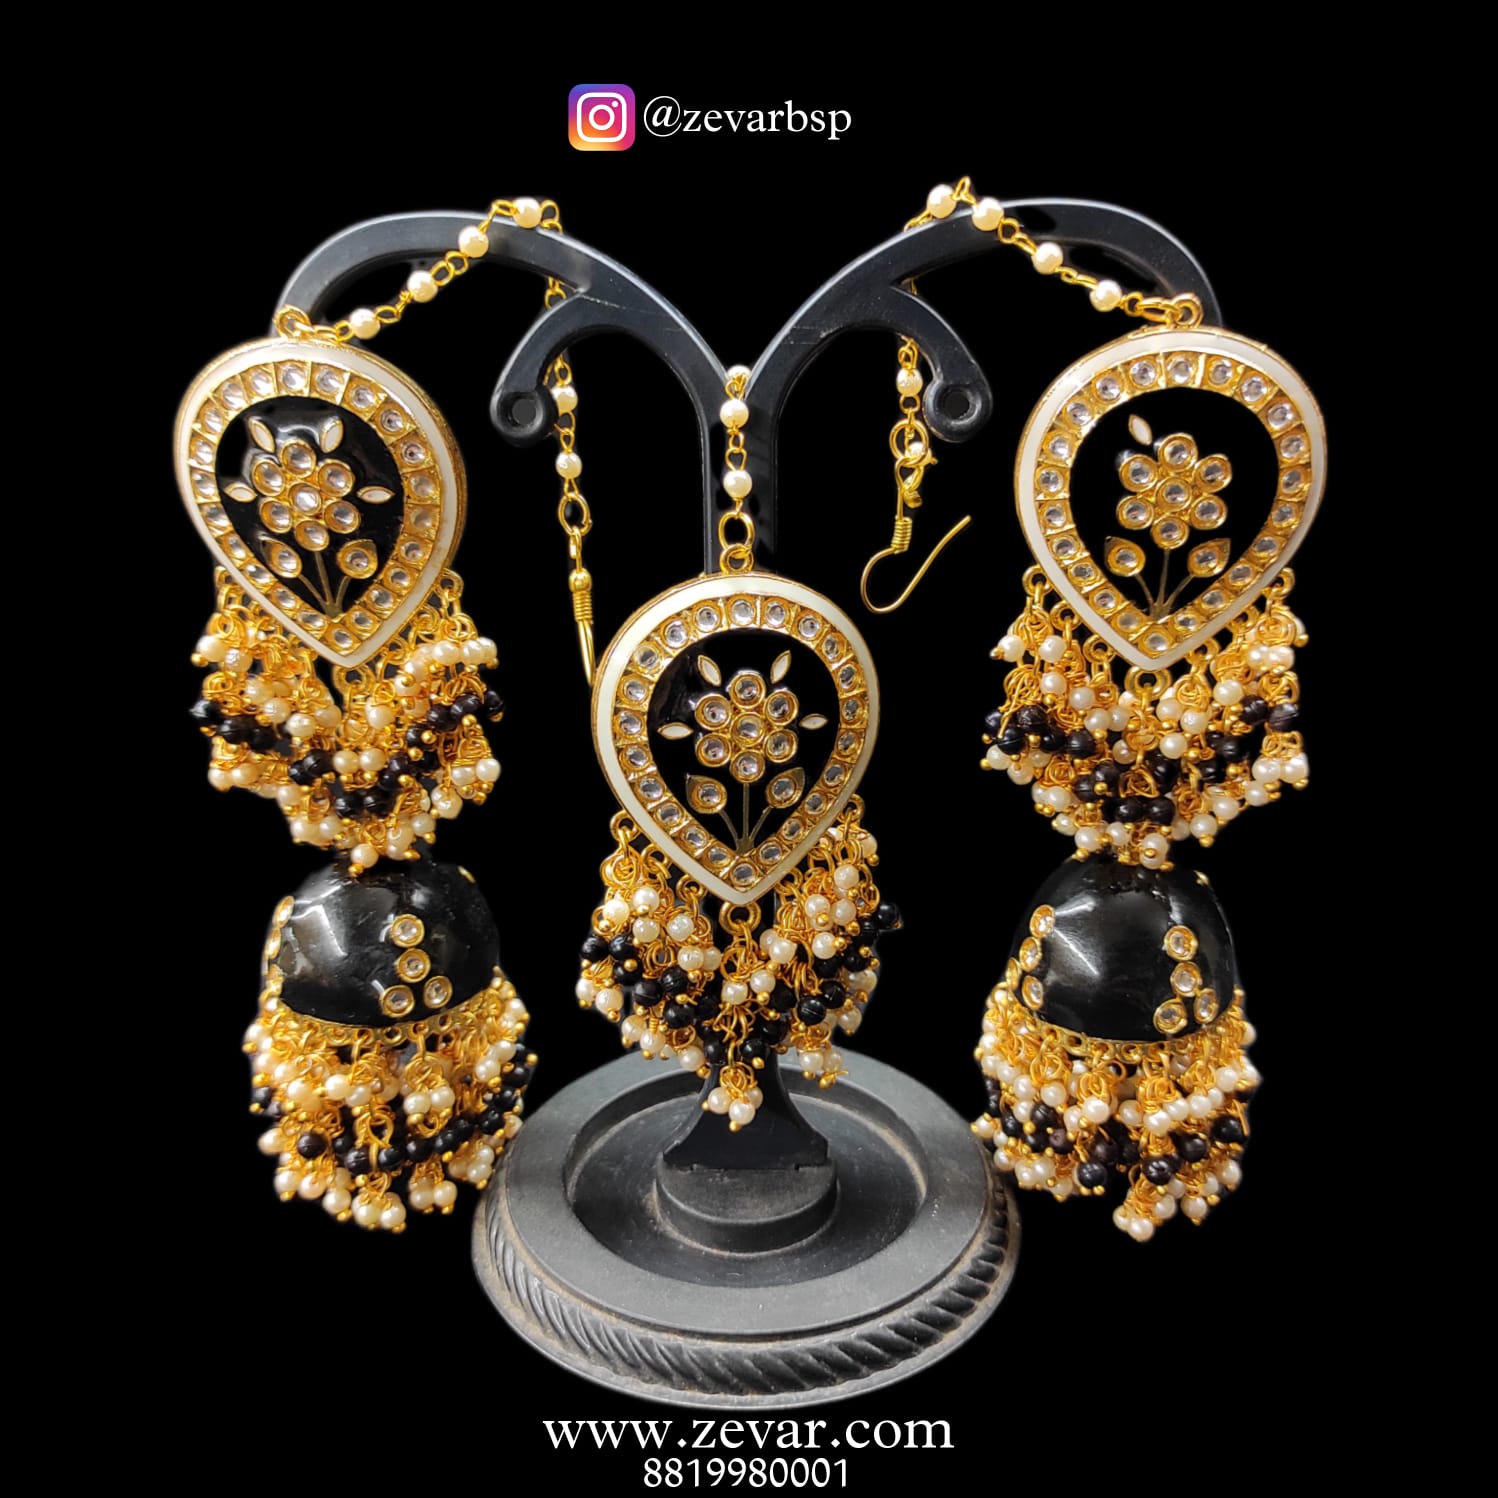 Zevar Earrings Copy of High Quality kundan Chandbali Design Earrings With Maangtika Set By Zevar